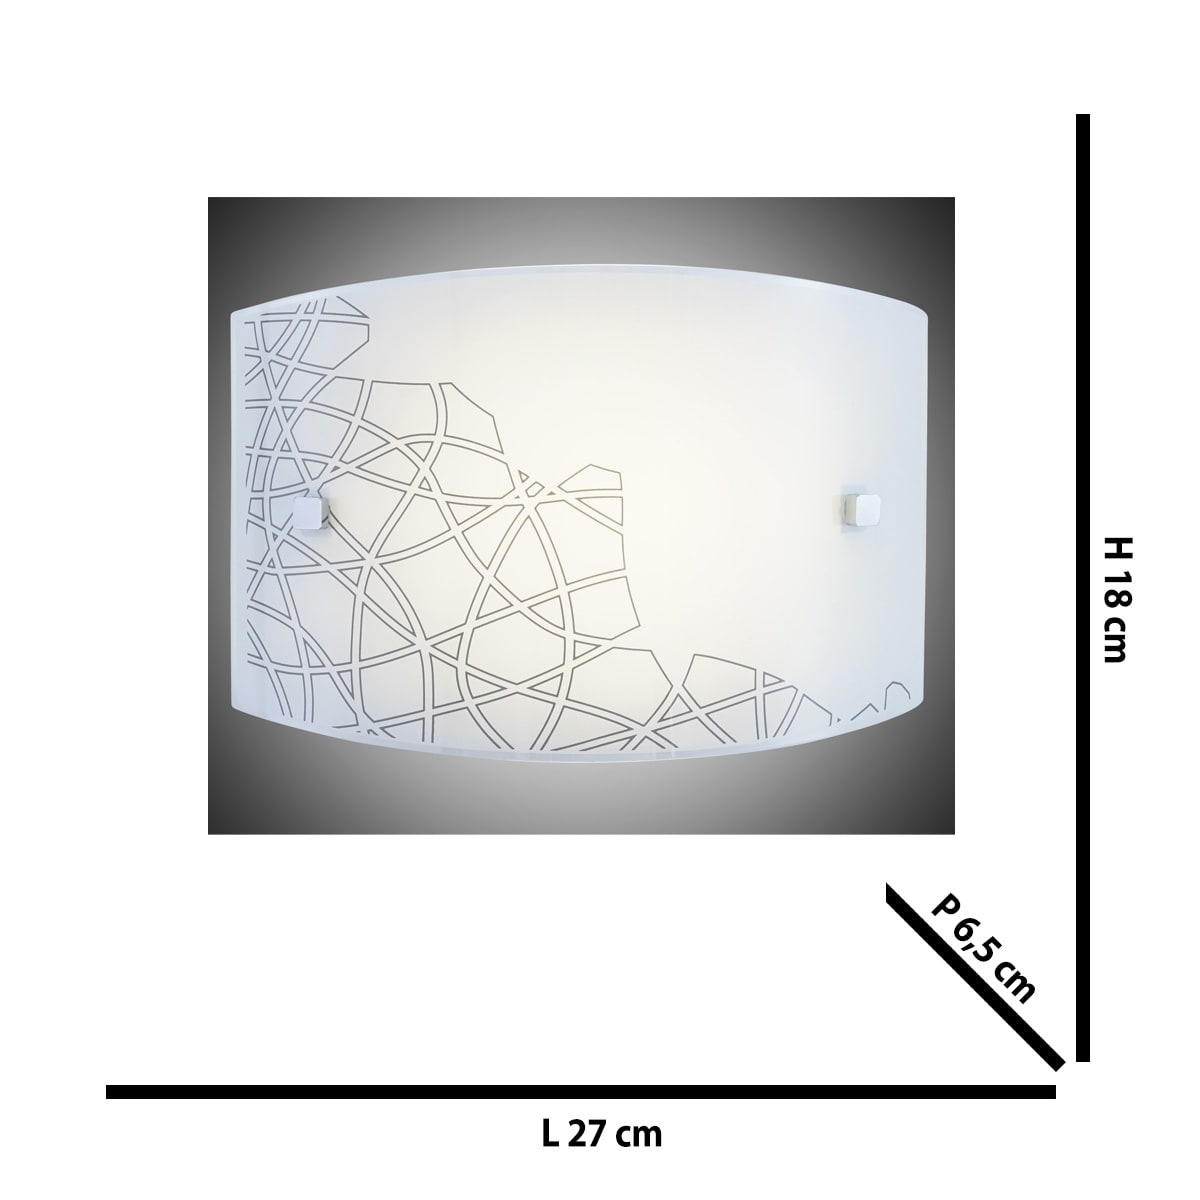 SIDNY WALL LIGHT WHITE GLASS 27X18CM LED 9W NATURAL LIGHT